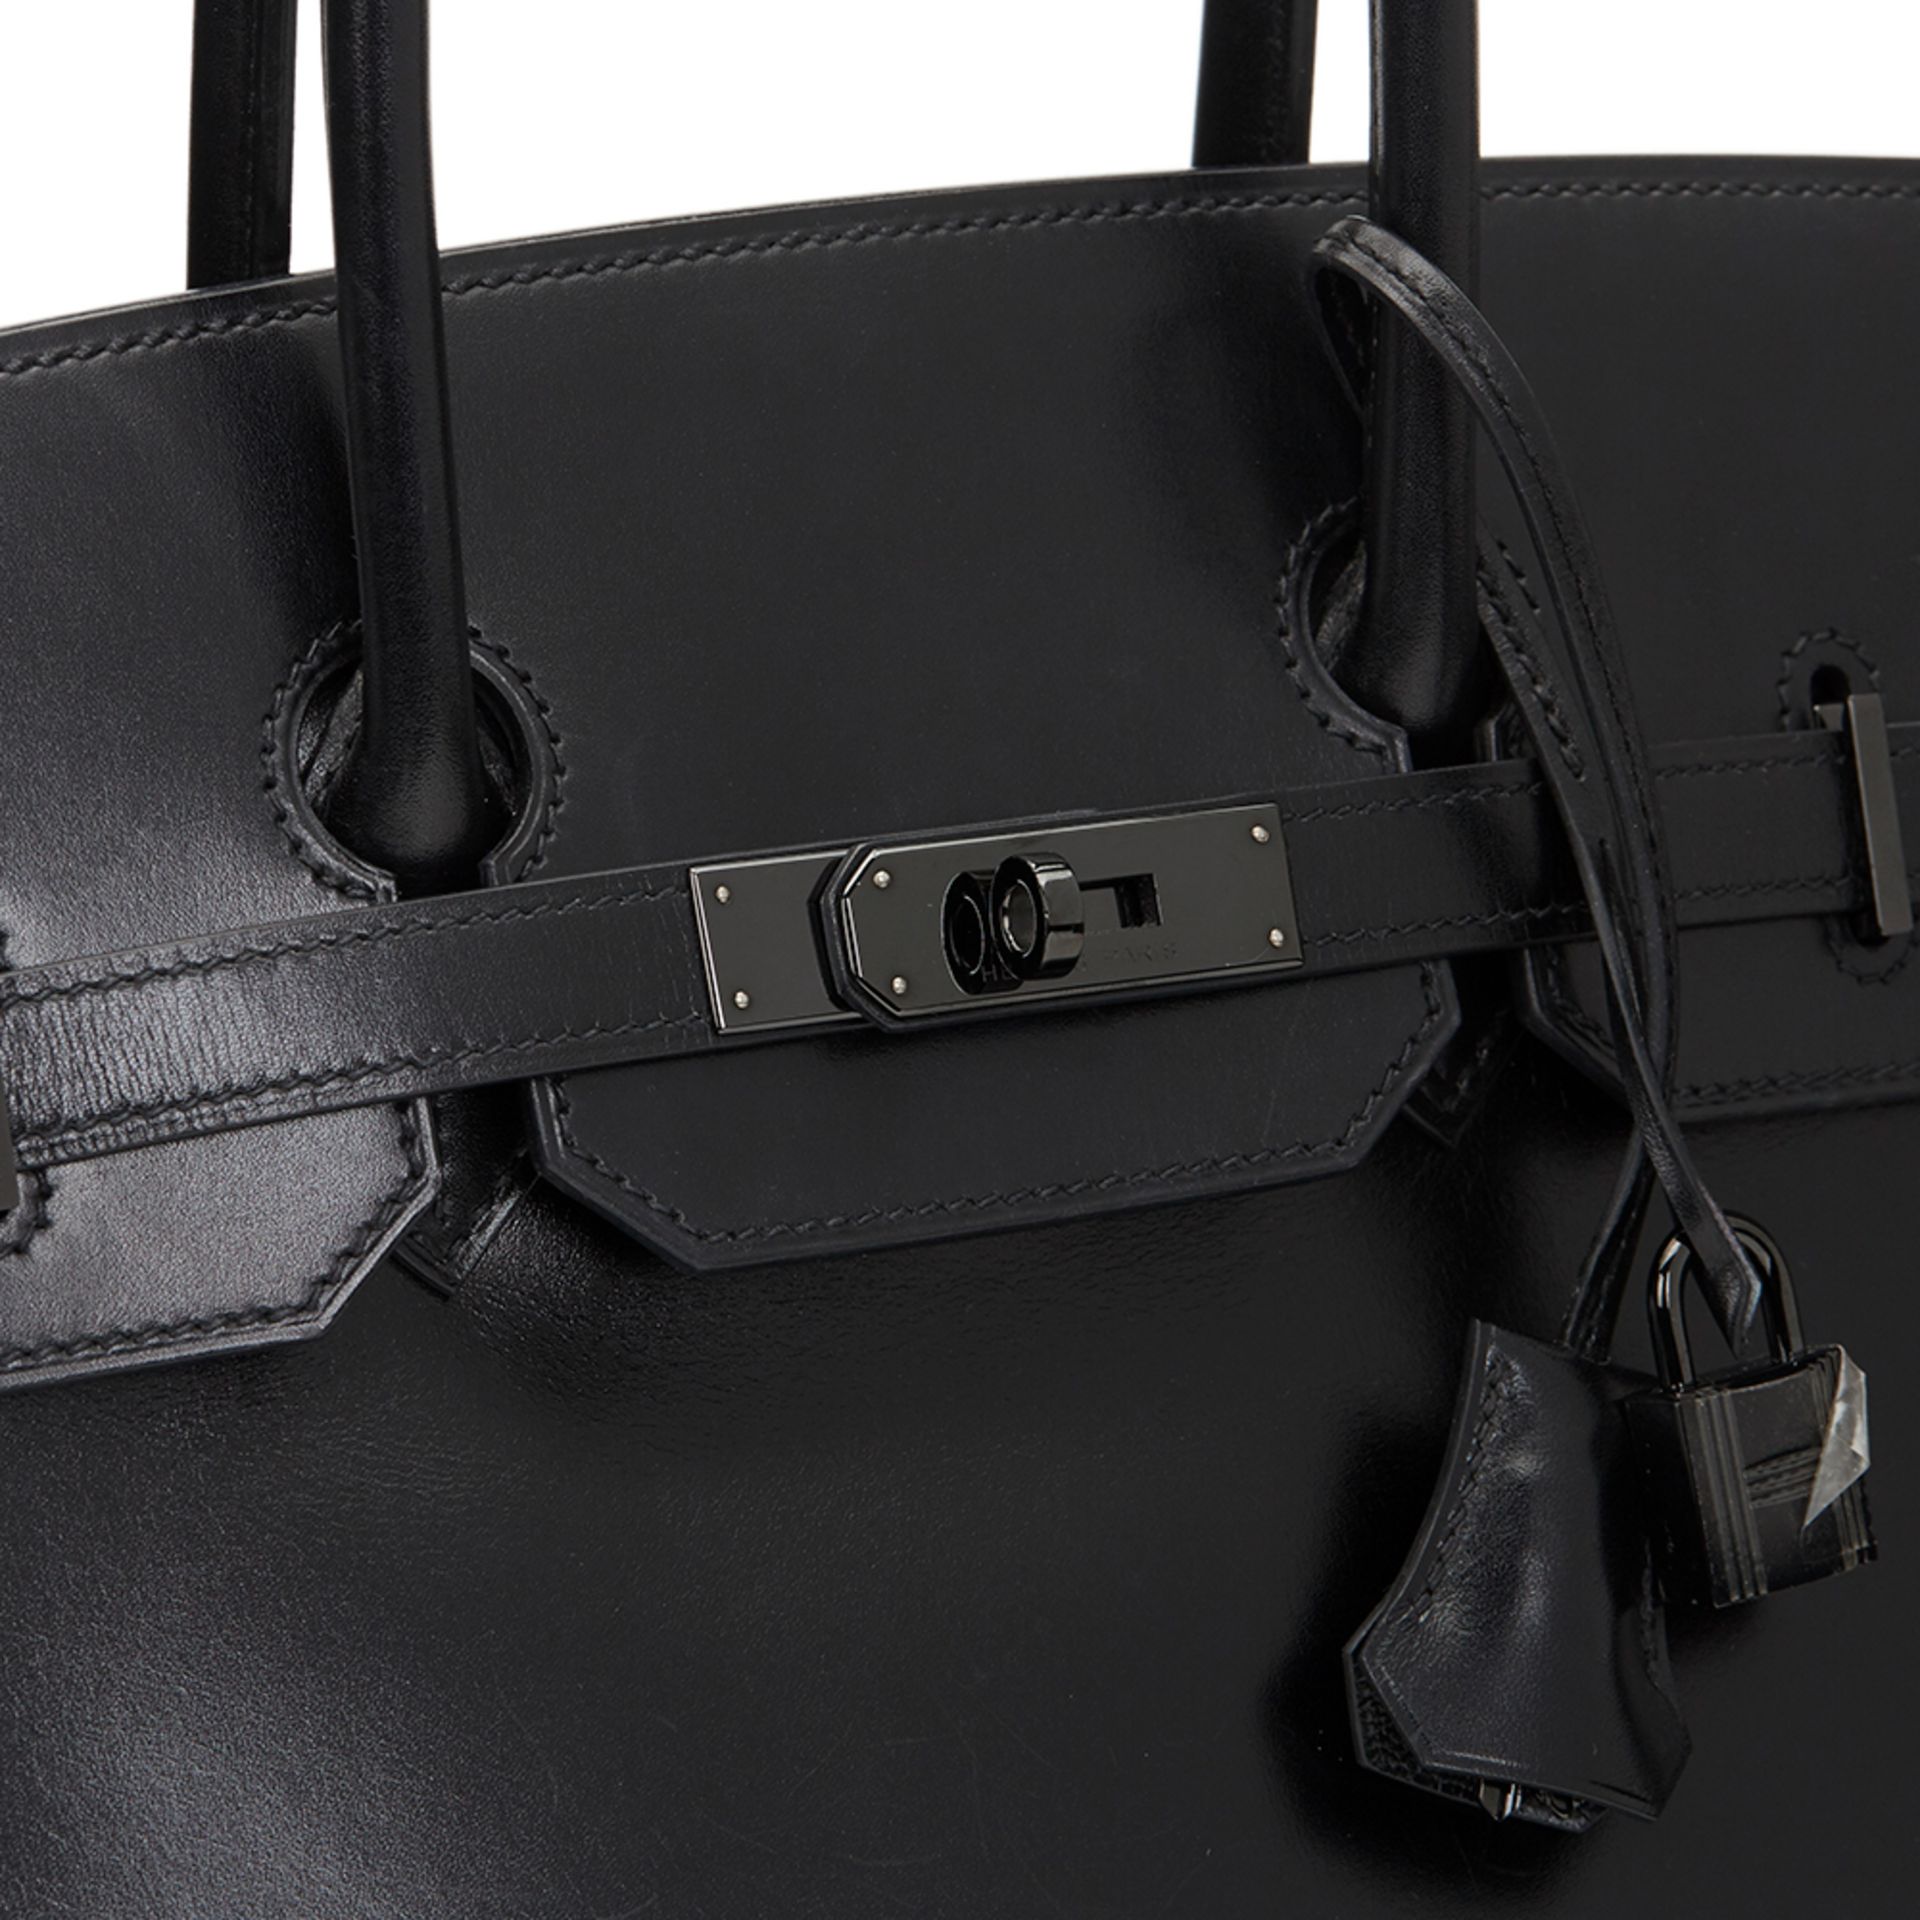 Black Box Calf Leather SO Black Birkin 35cm - Image 8 of 12